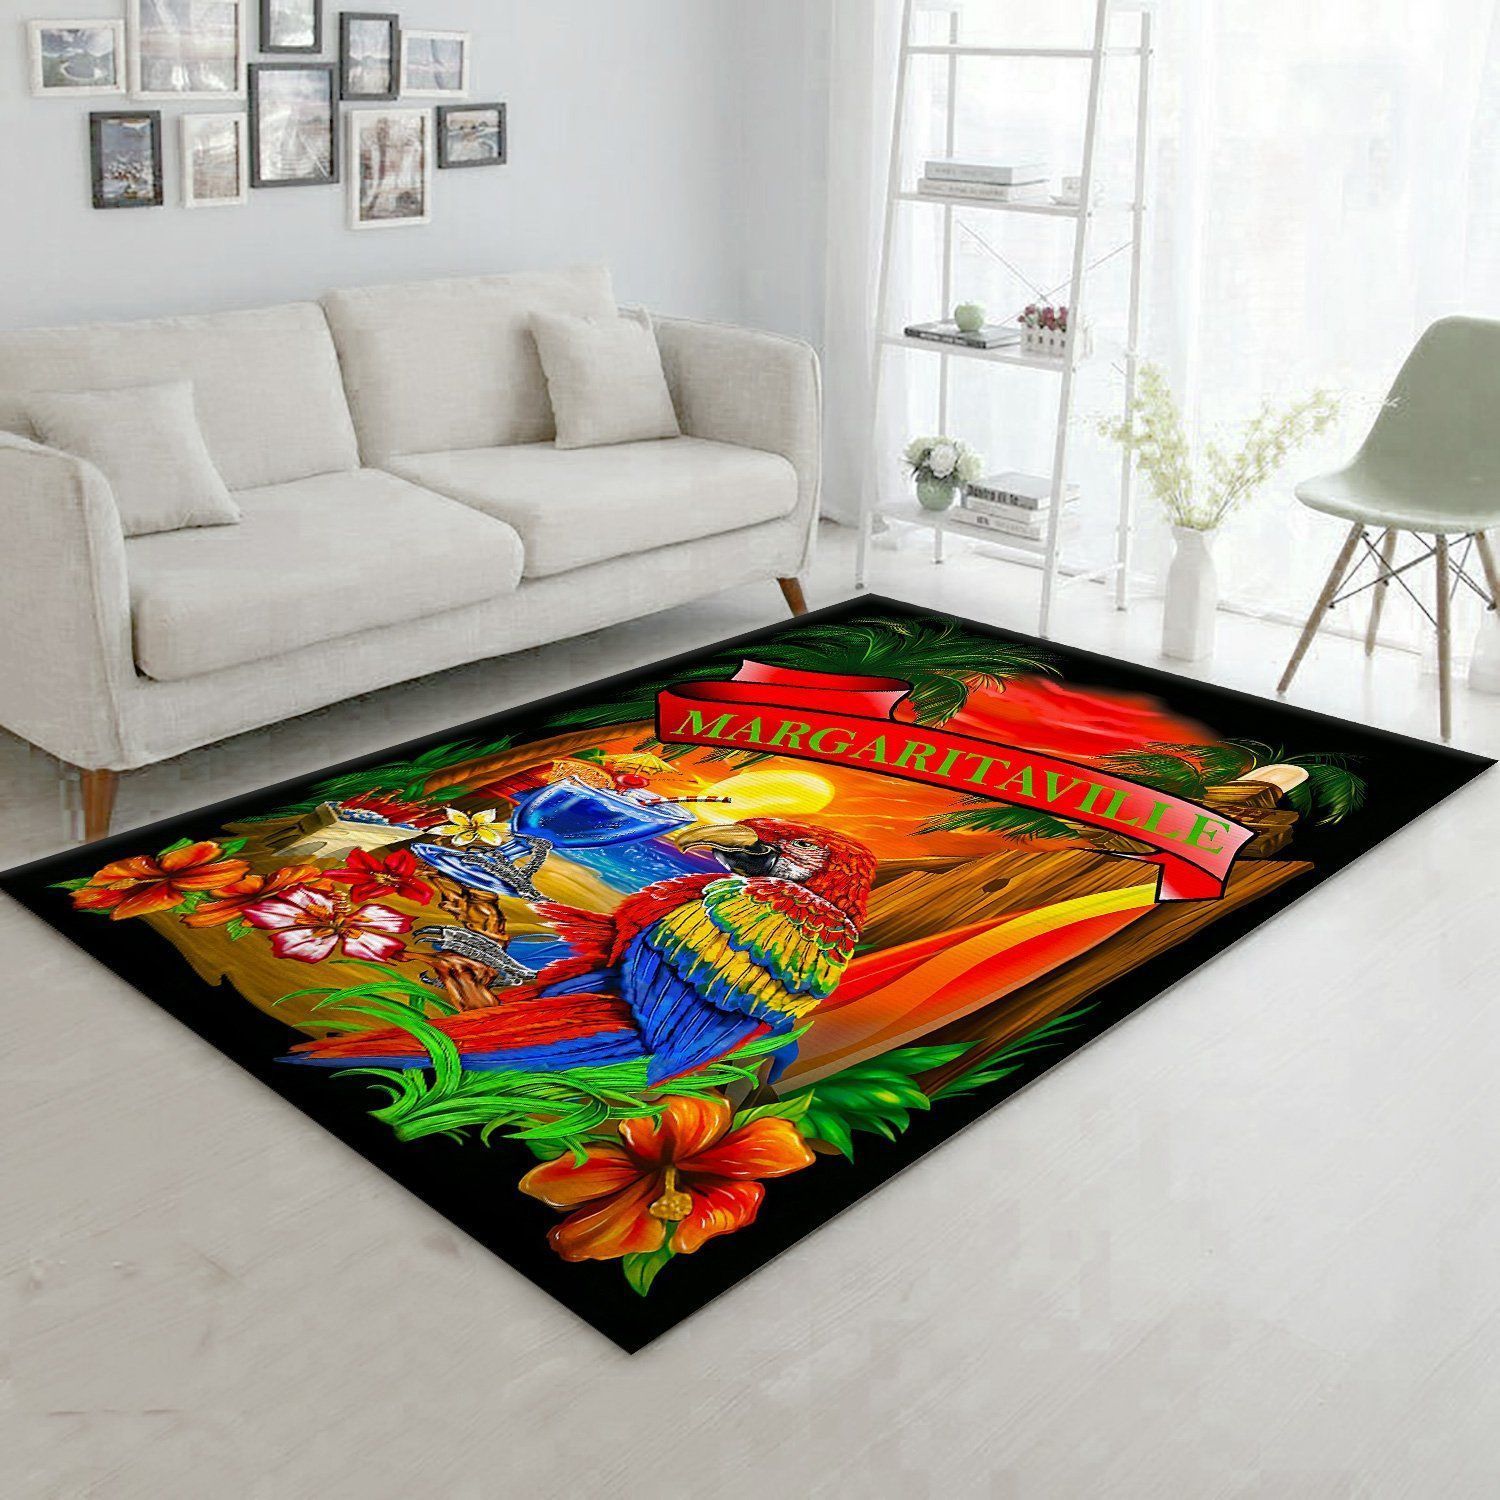 Margaritaville Area Rug Carpets Black Parrot Beach Area Rug Carpets Living Room Rugs Floor Decor - Indoor Outdoor Rugs 1